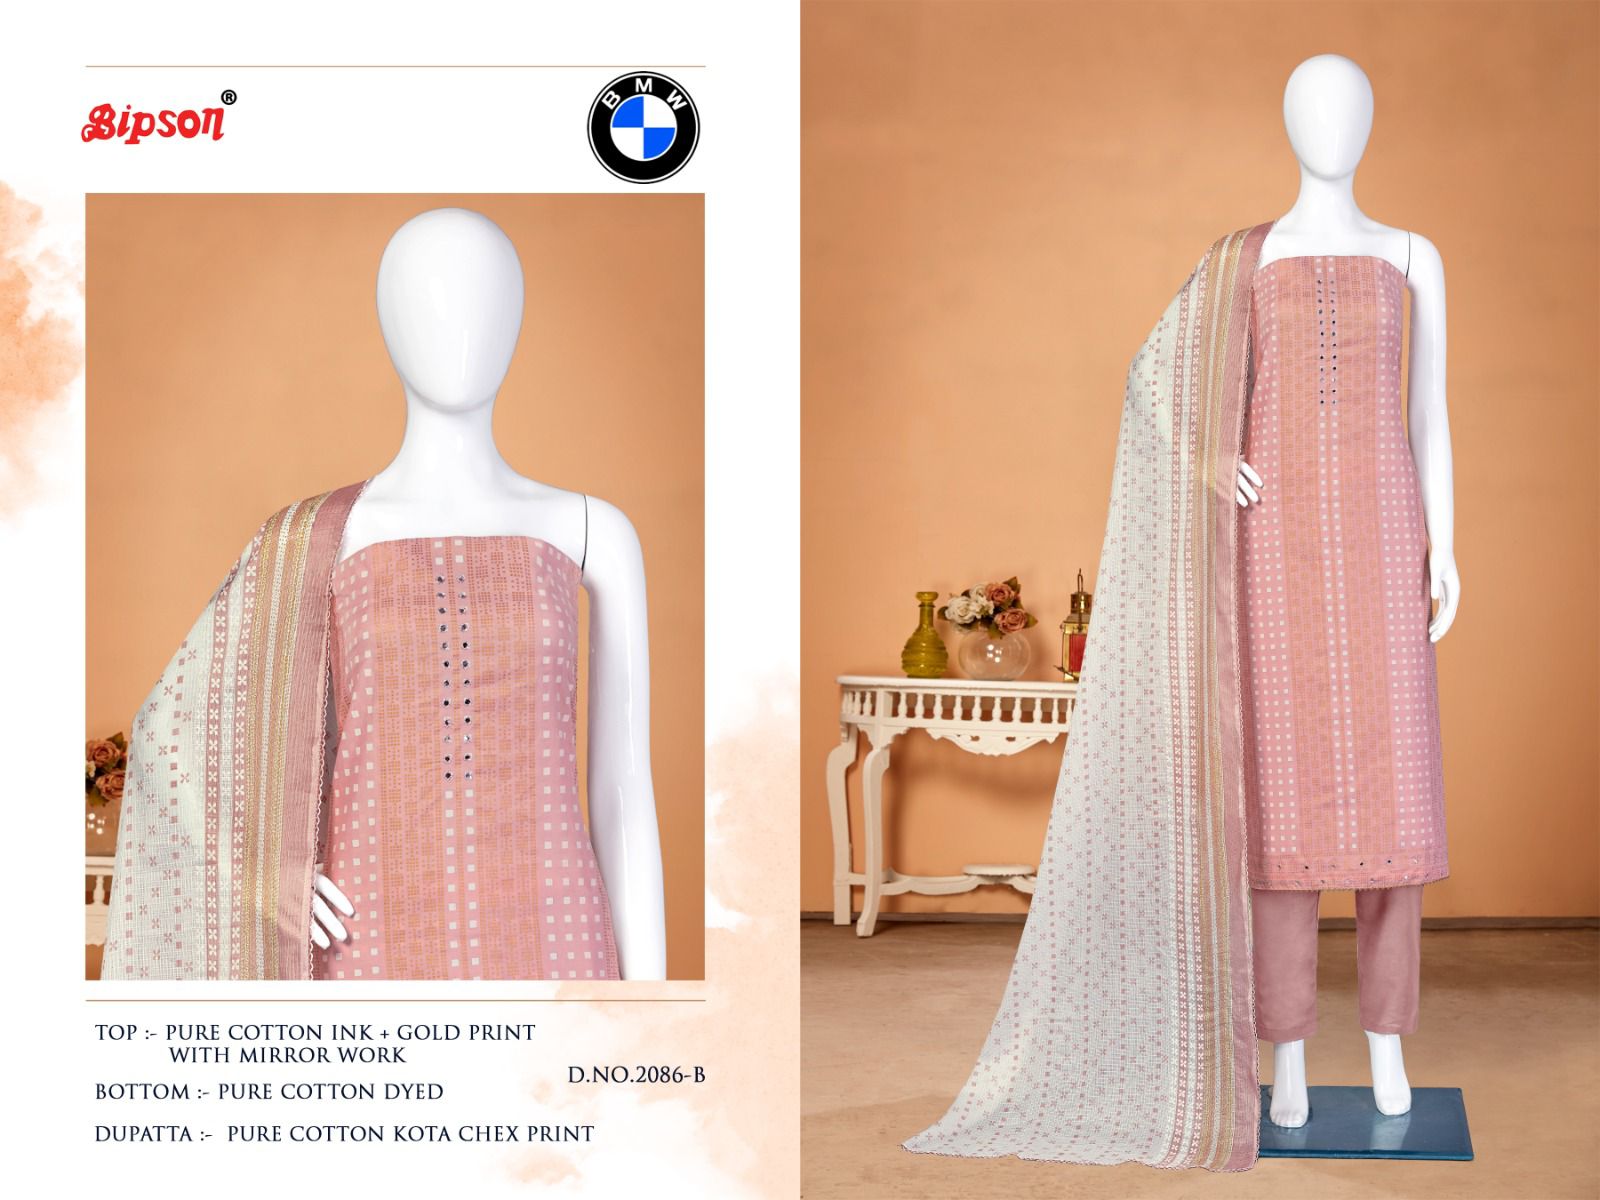 bipson  BMW  2086 cotton innovative print salwar suit catalog